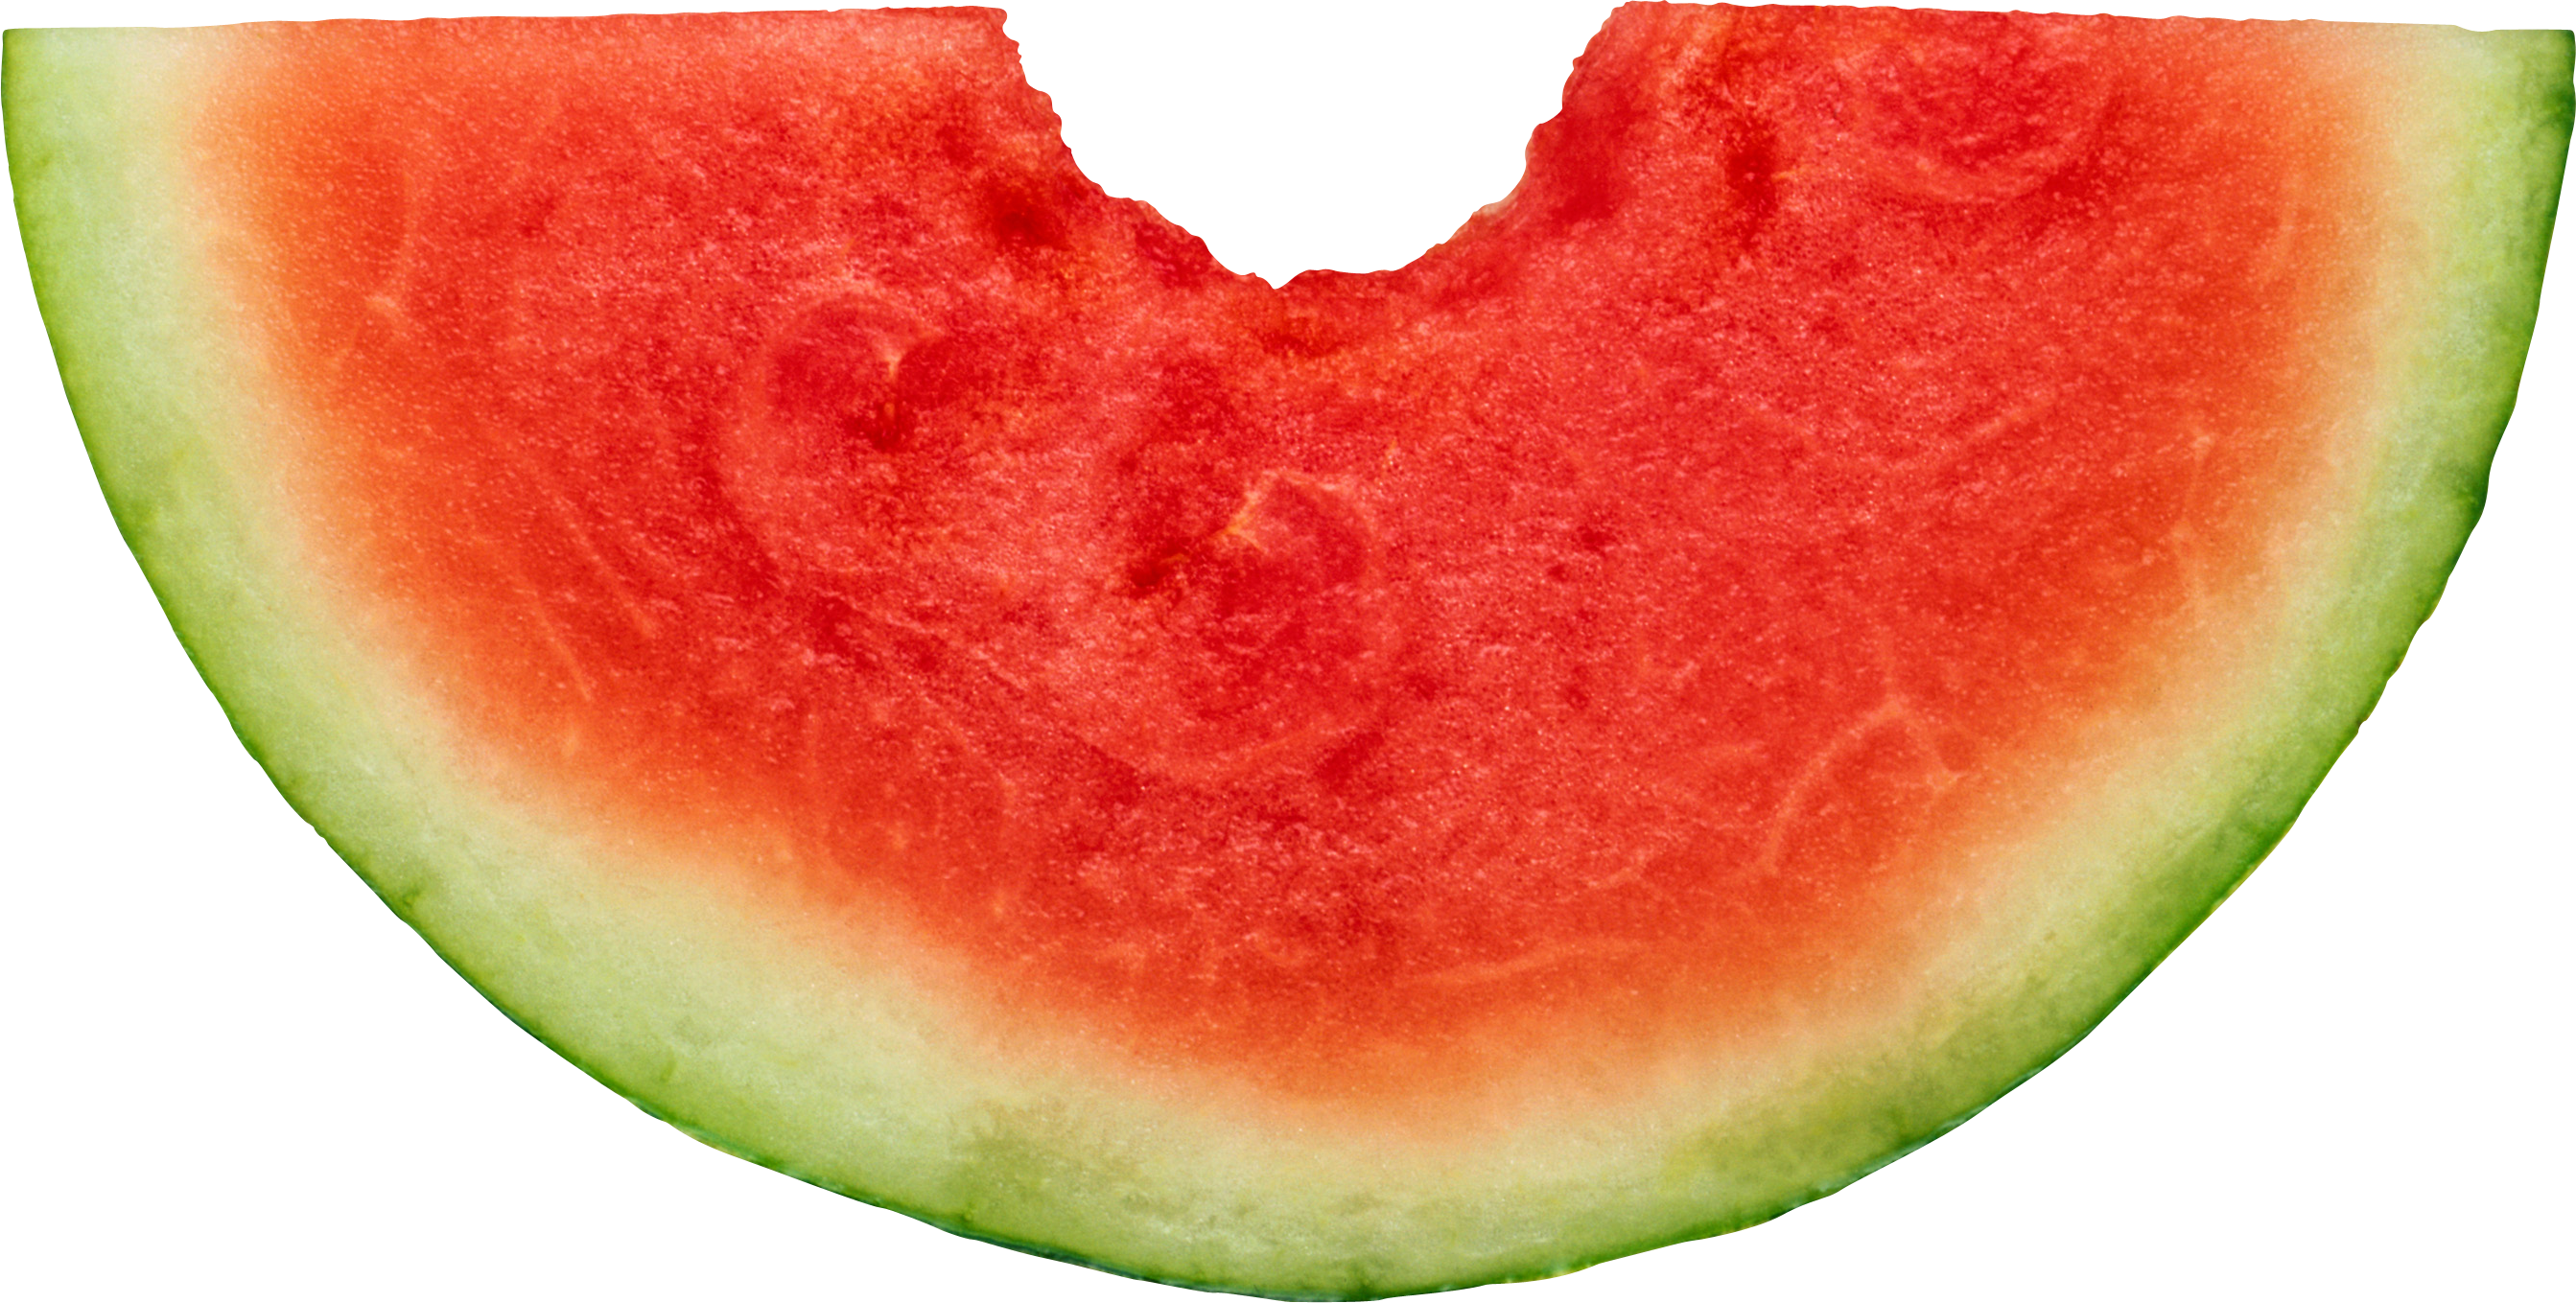 Watermelon clipart eye. Sixteen isolated stock photo